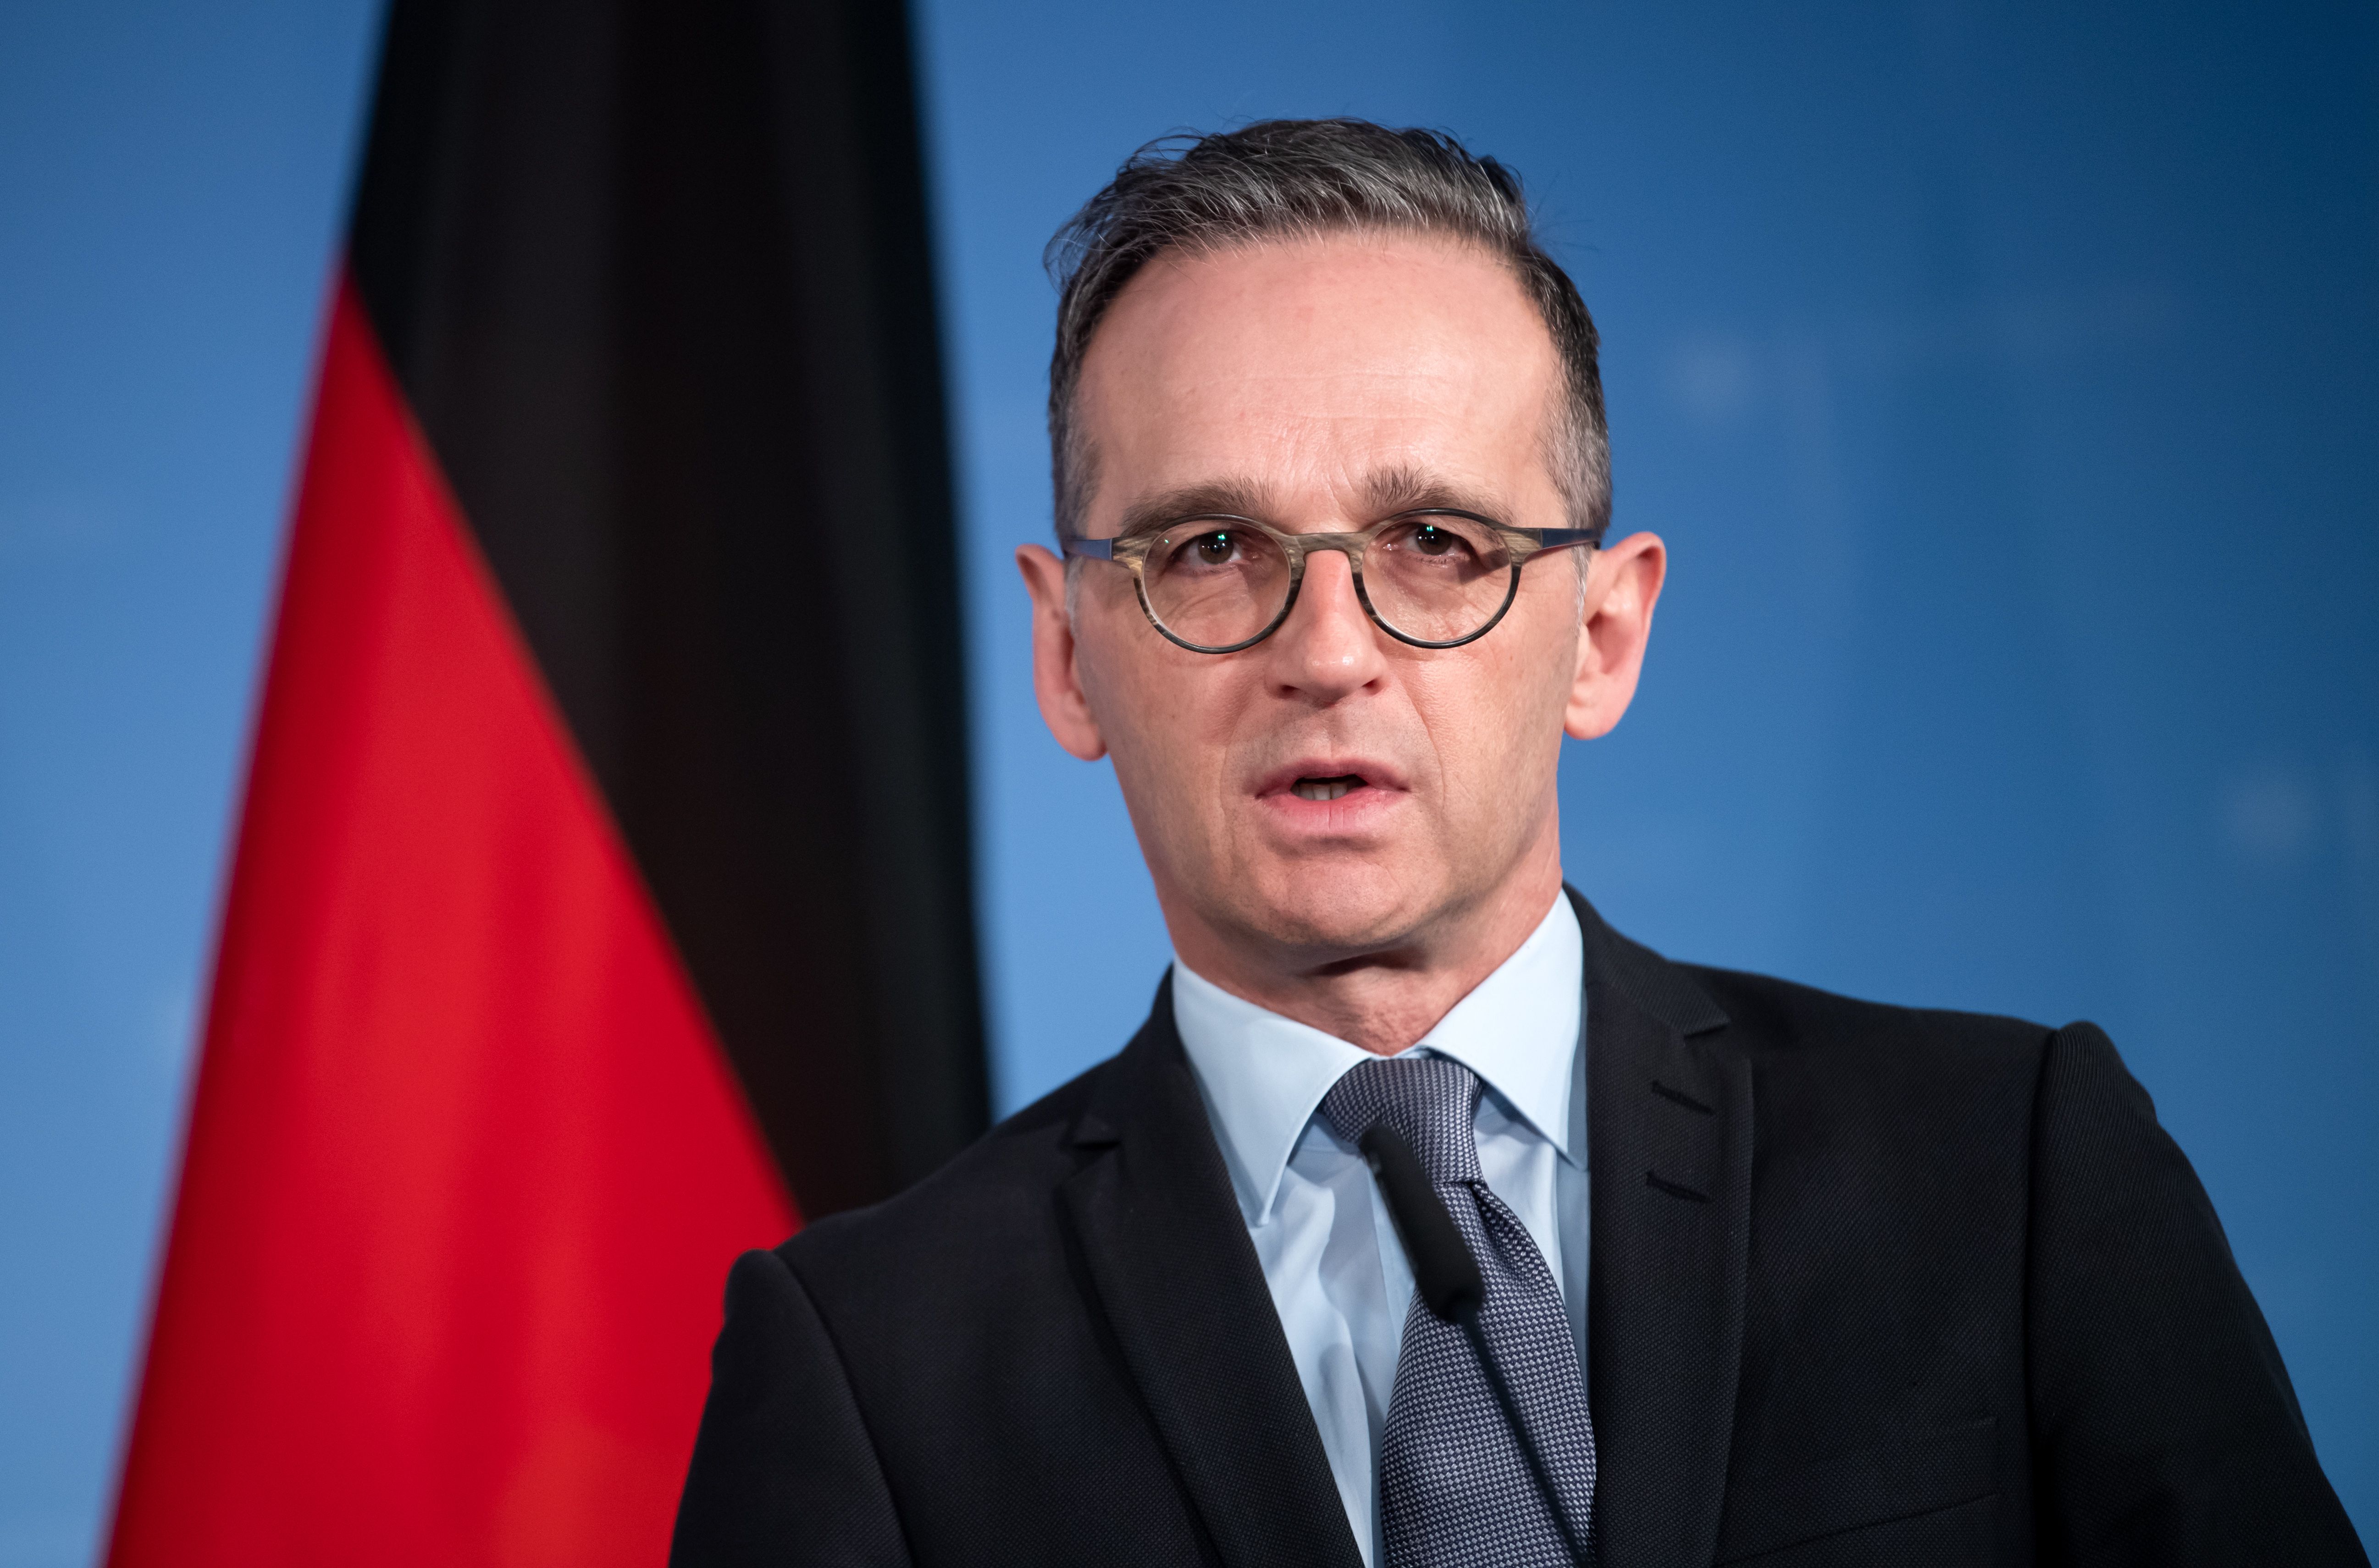 20/02/2020 Heiko Maas, ministro de Exteriores de Alemania POLITICA INTERNACIONAL Bernd von Jutrczenka/dpa 